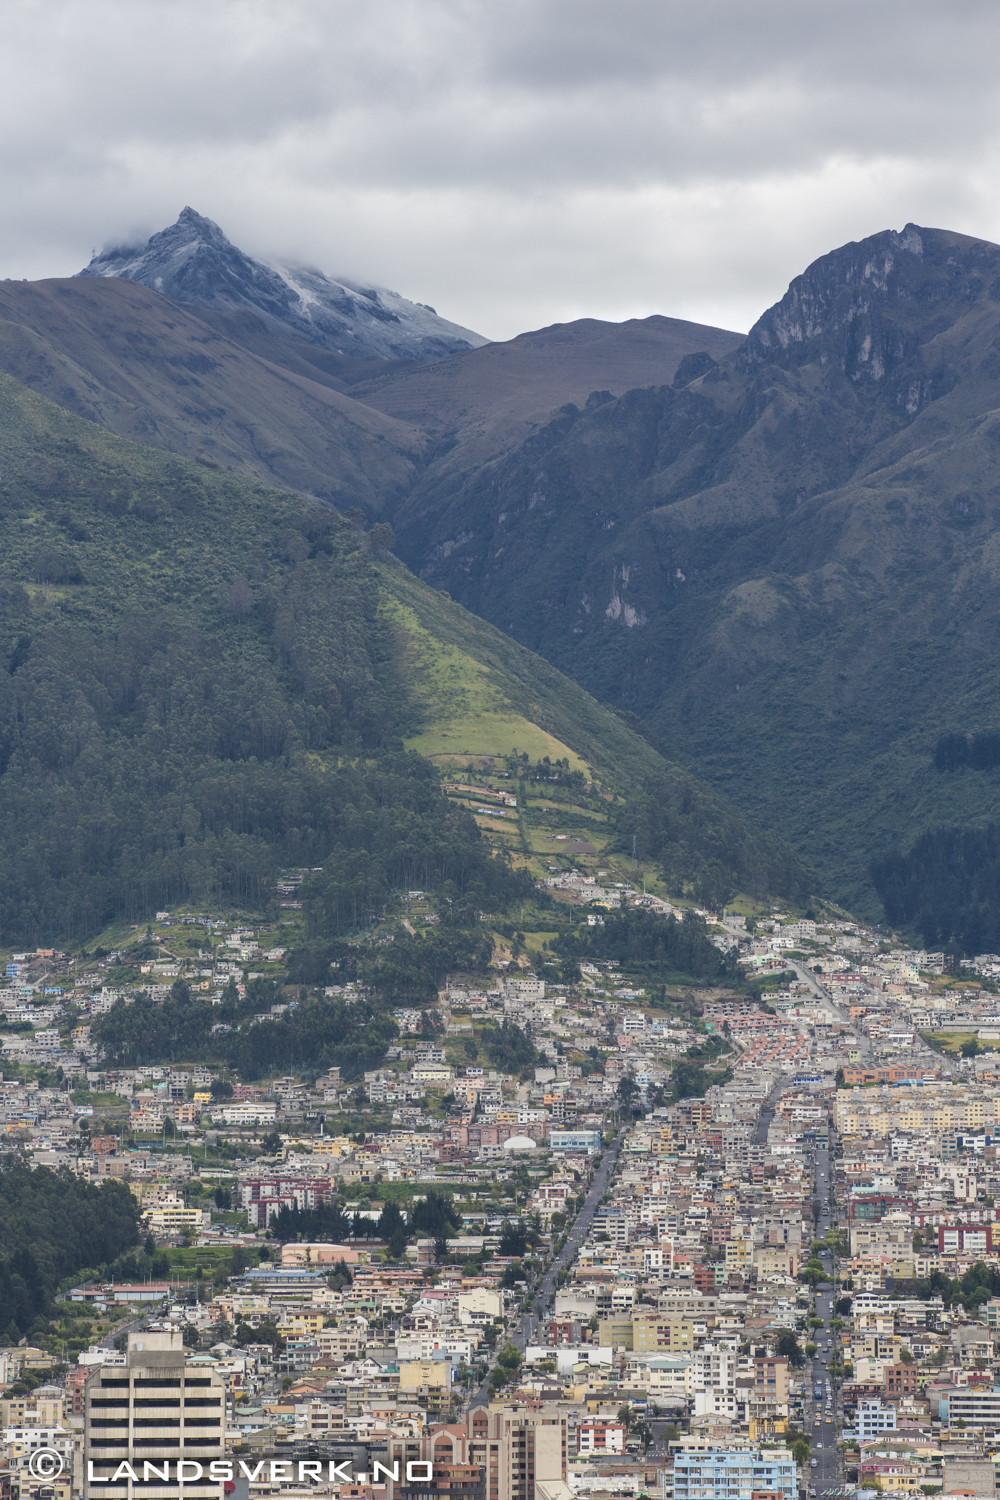 New Quito, Ecuador. 

(Canon EOS 5D Mark III / Canon EF 70-200mm f/2.8 L IS II USM)